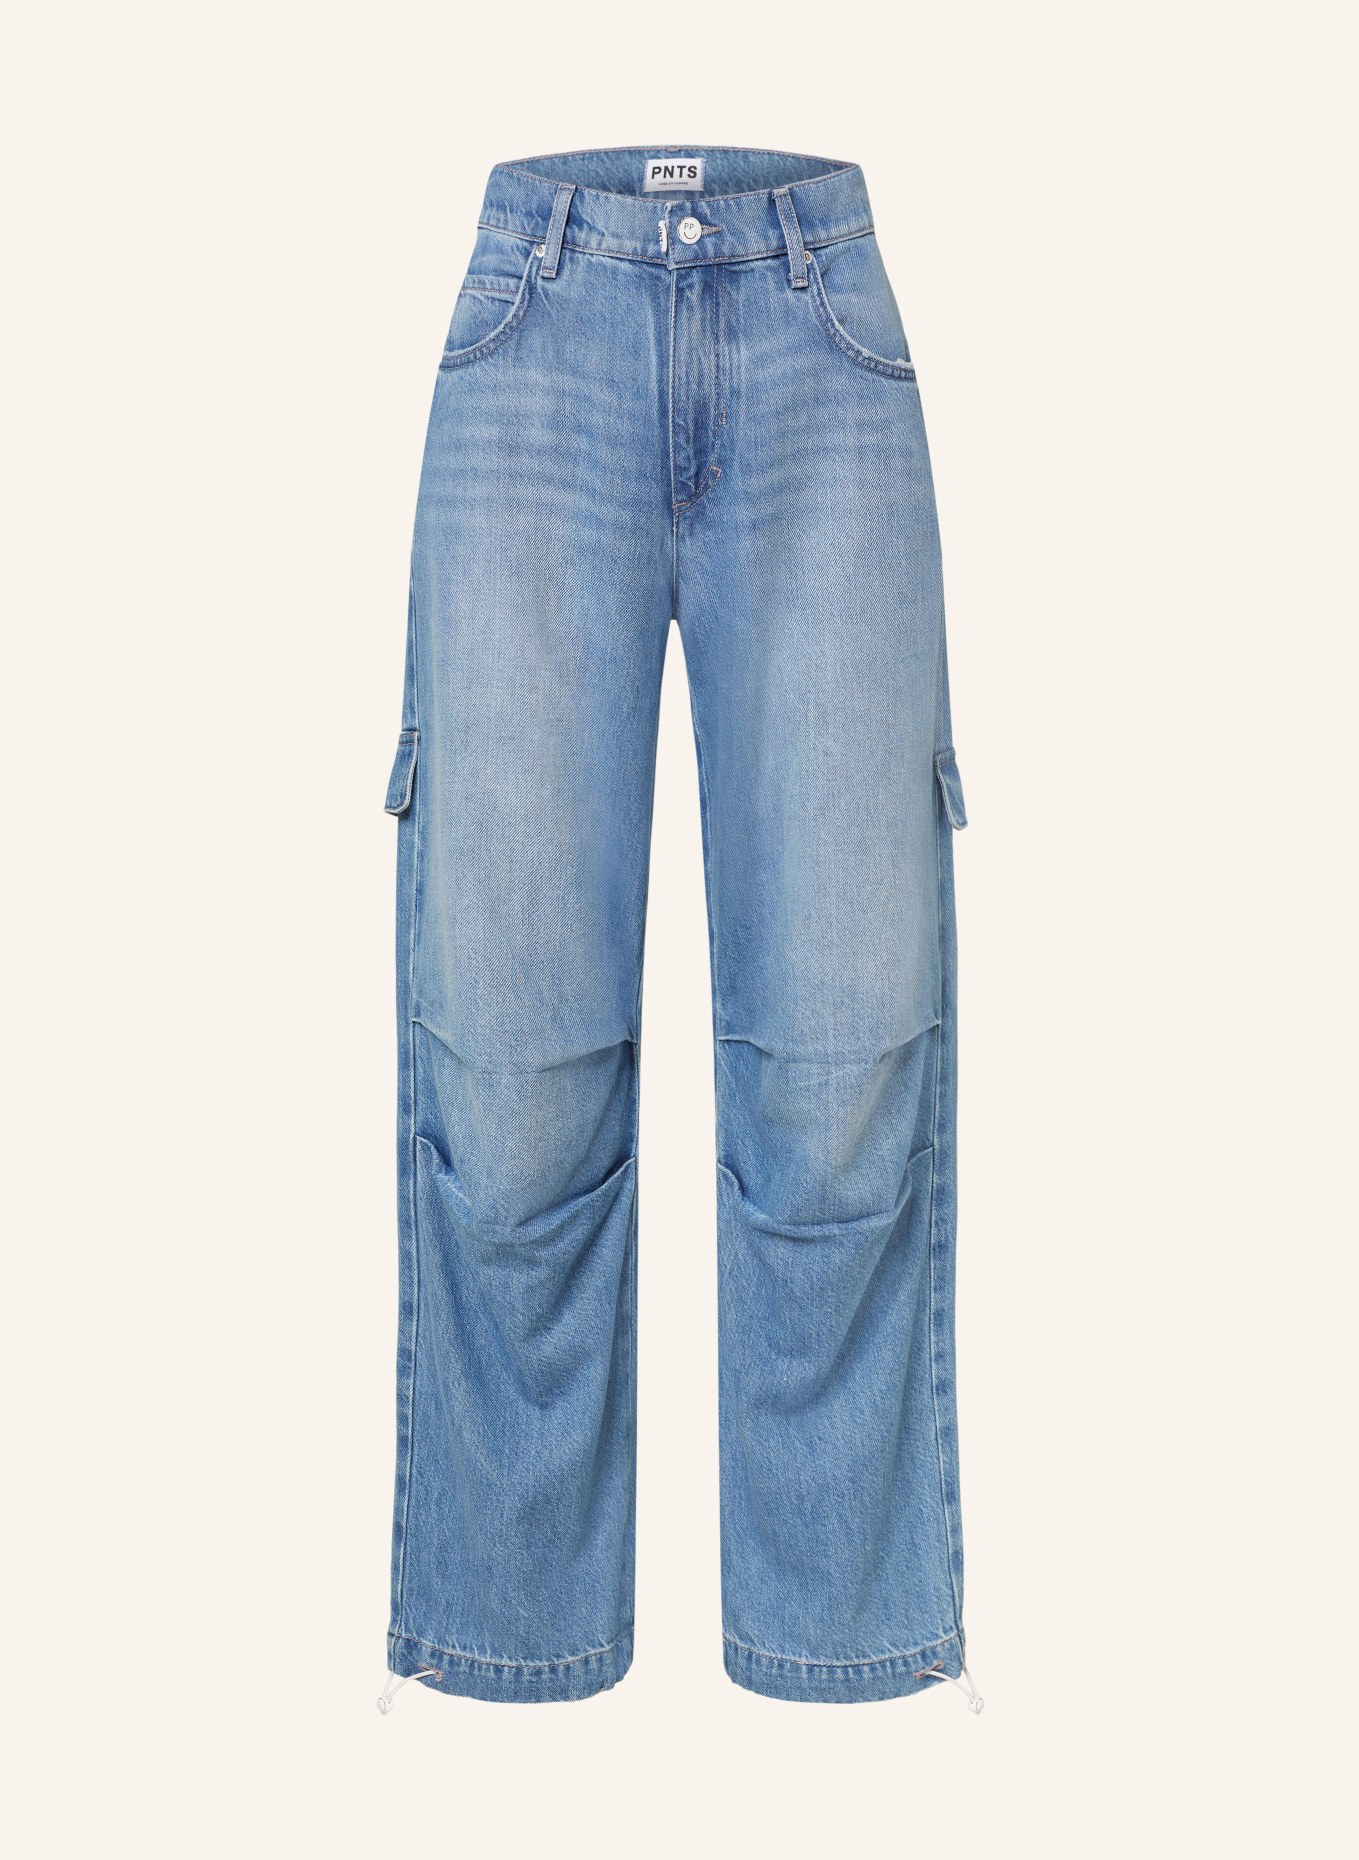 PNTS Jeans THE O SHAPE, Farbe: 28 skyfaded blue (Bild 1)